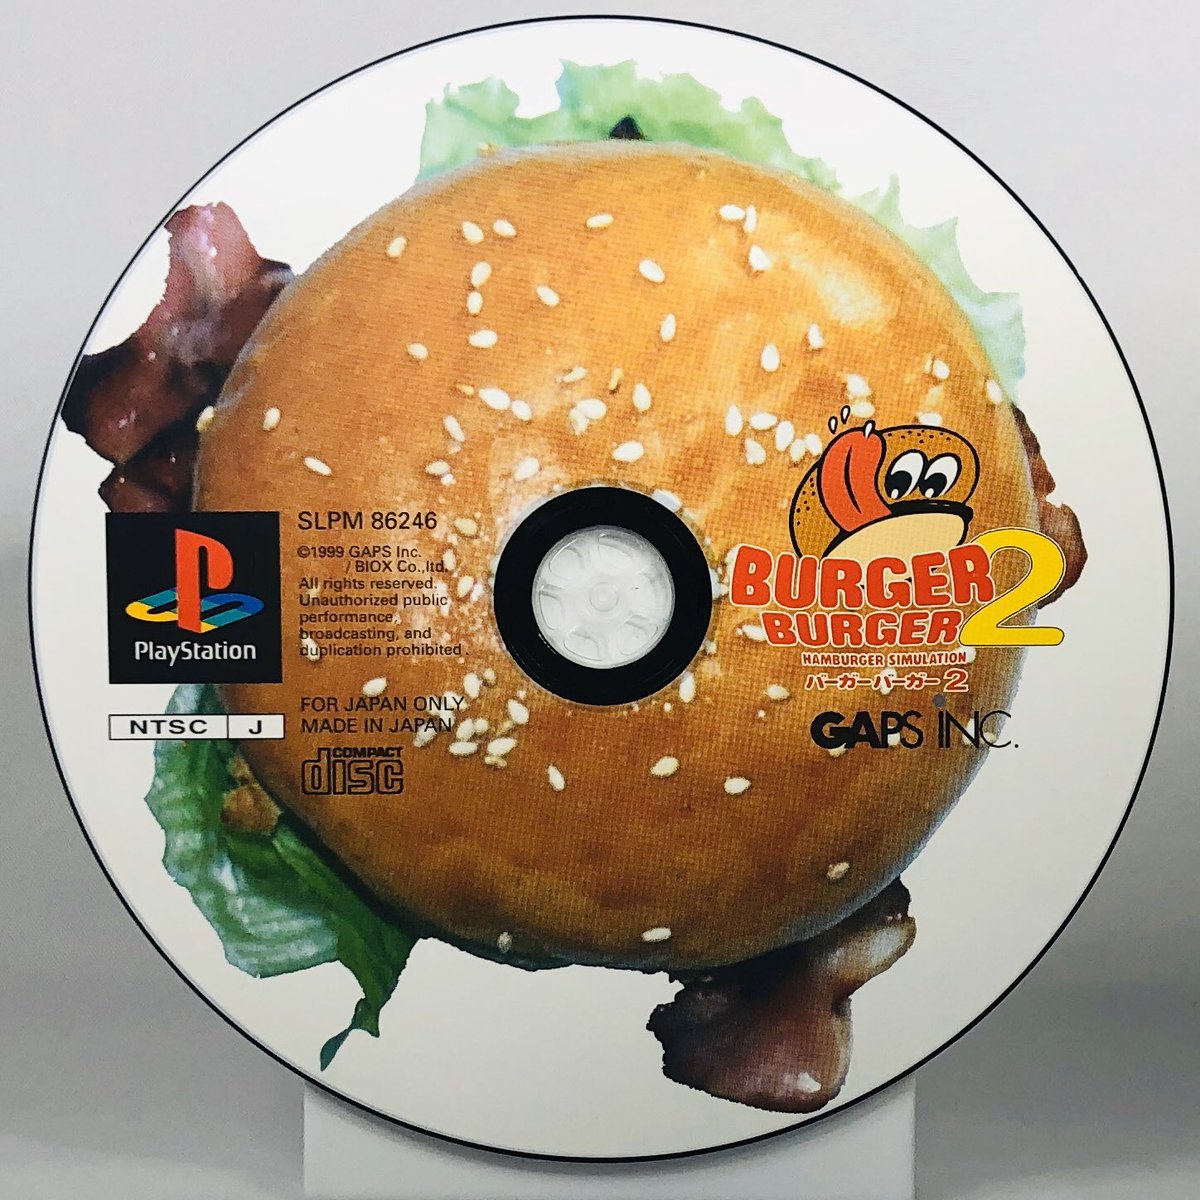 Burger Burger 2GAPS INC.PlayStation, 1999